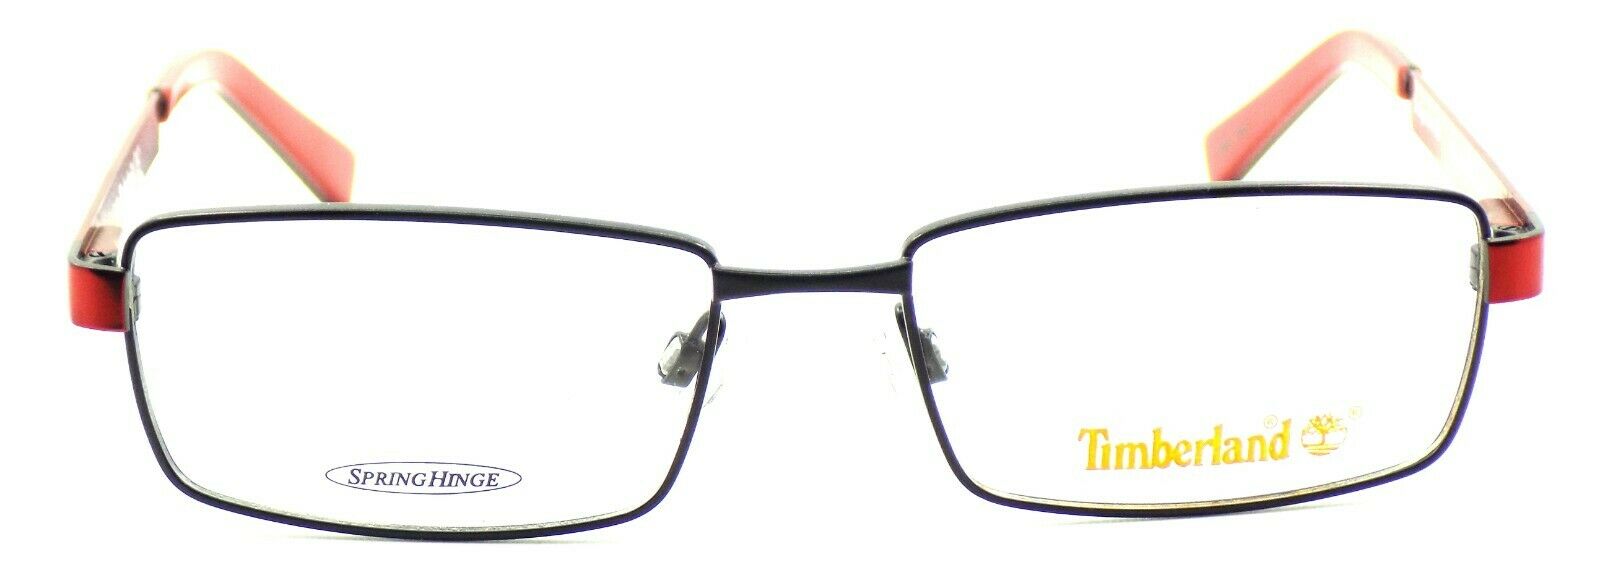 2-TIMBERLAND TB5060 002 Kids Eyeglasses Frames 50-16-130 Matte Black / Red-664689713967-IKSpecs